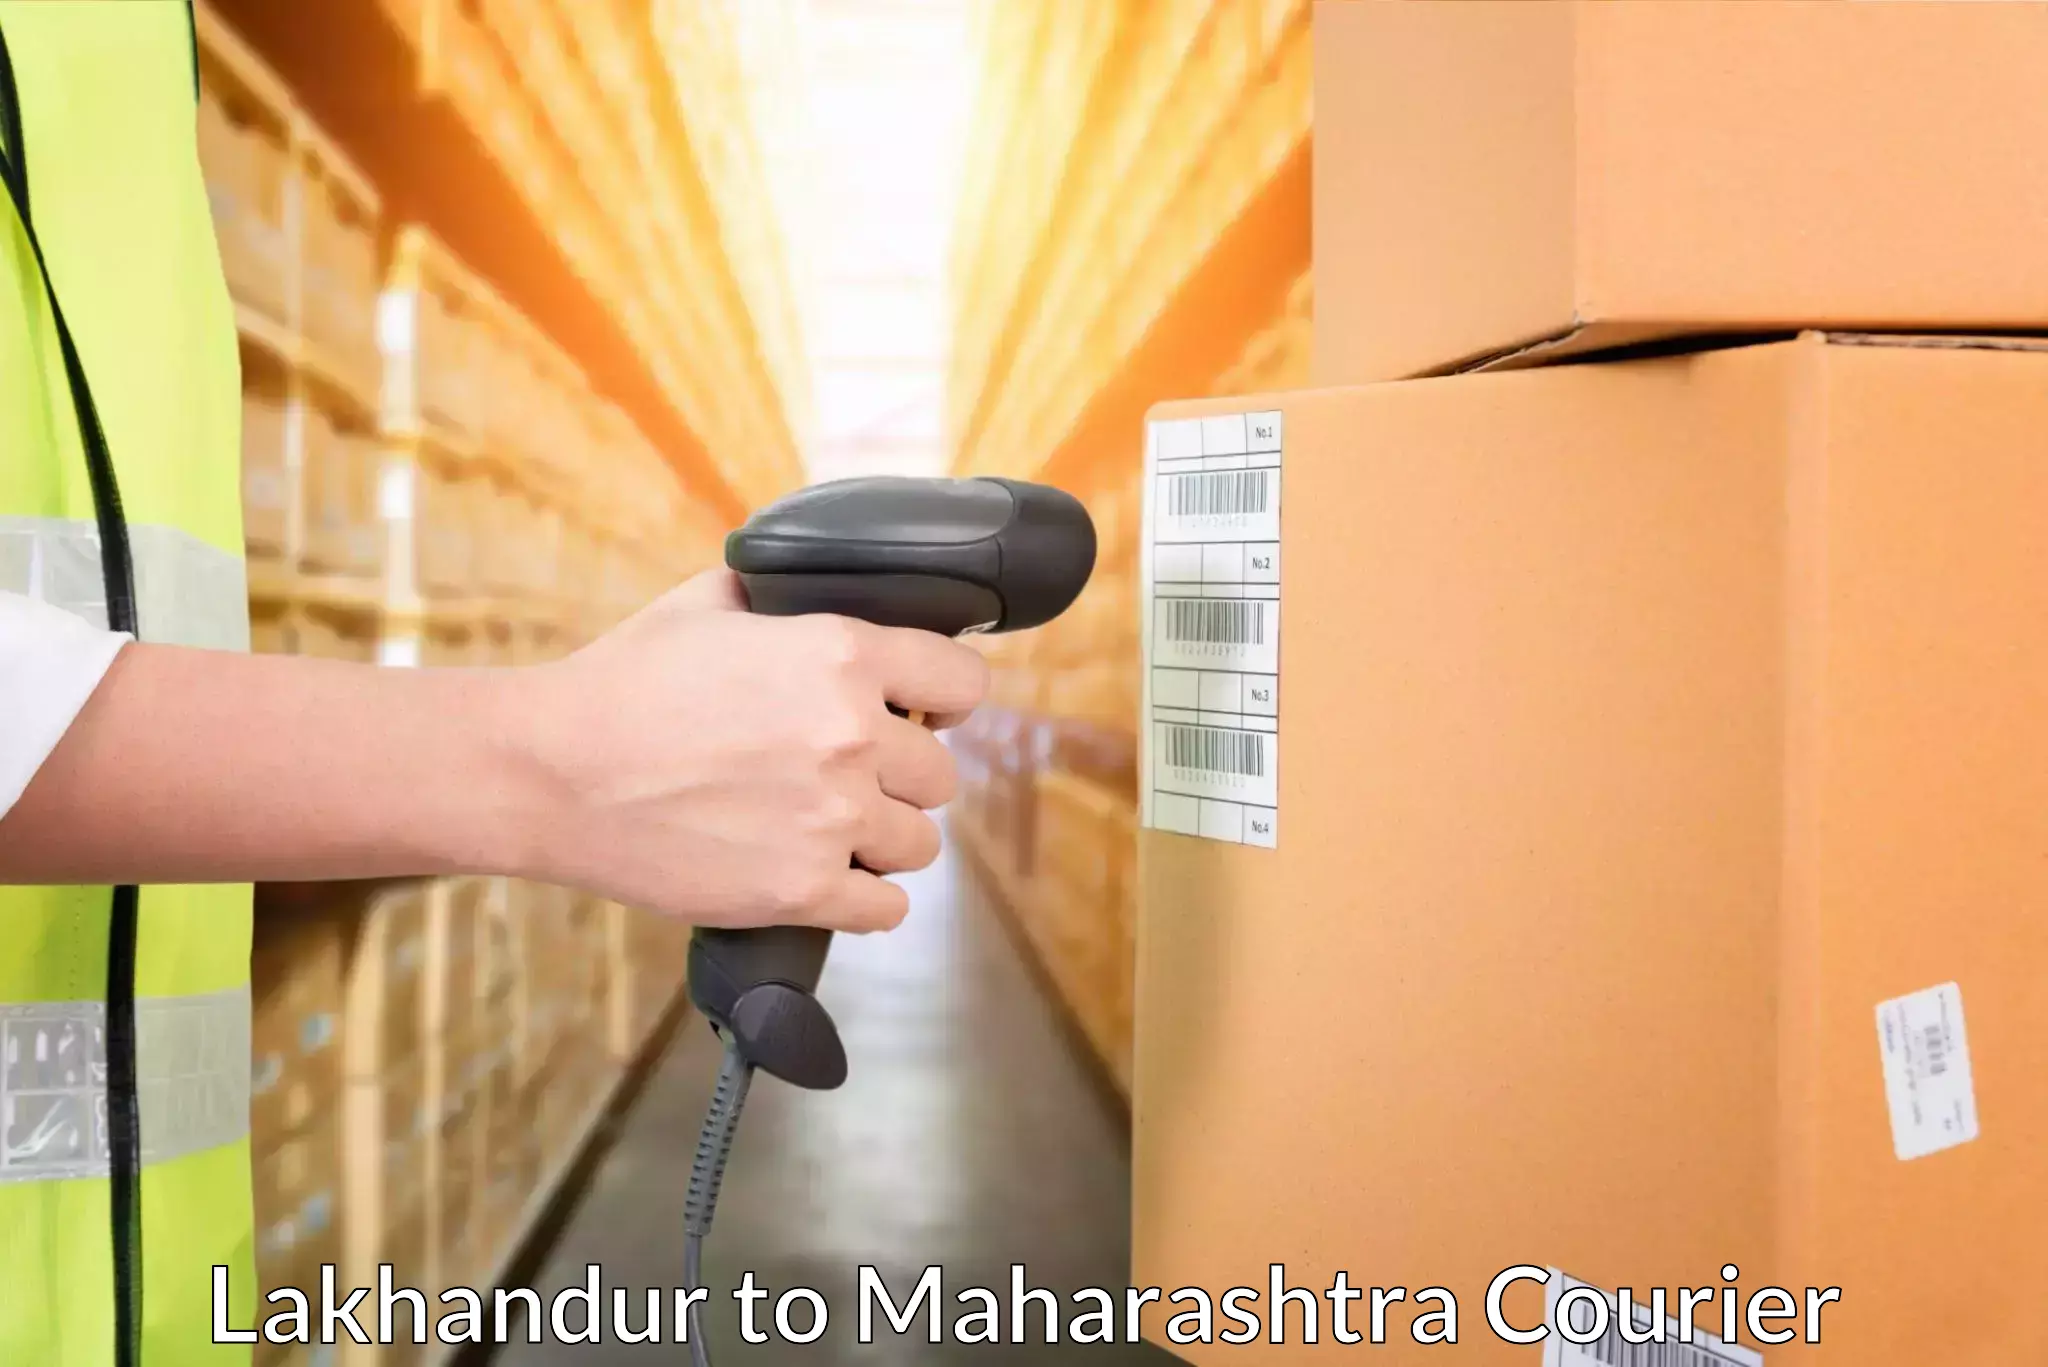 Express logistics providers Lakhandur to Rashiwade